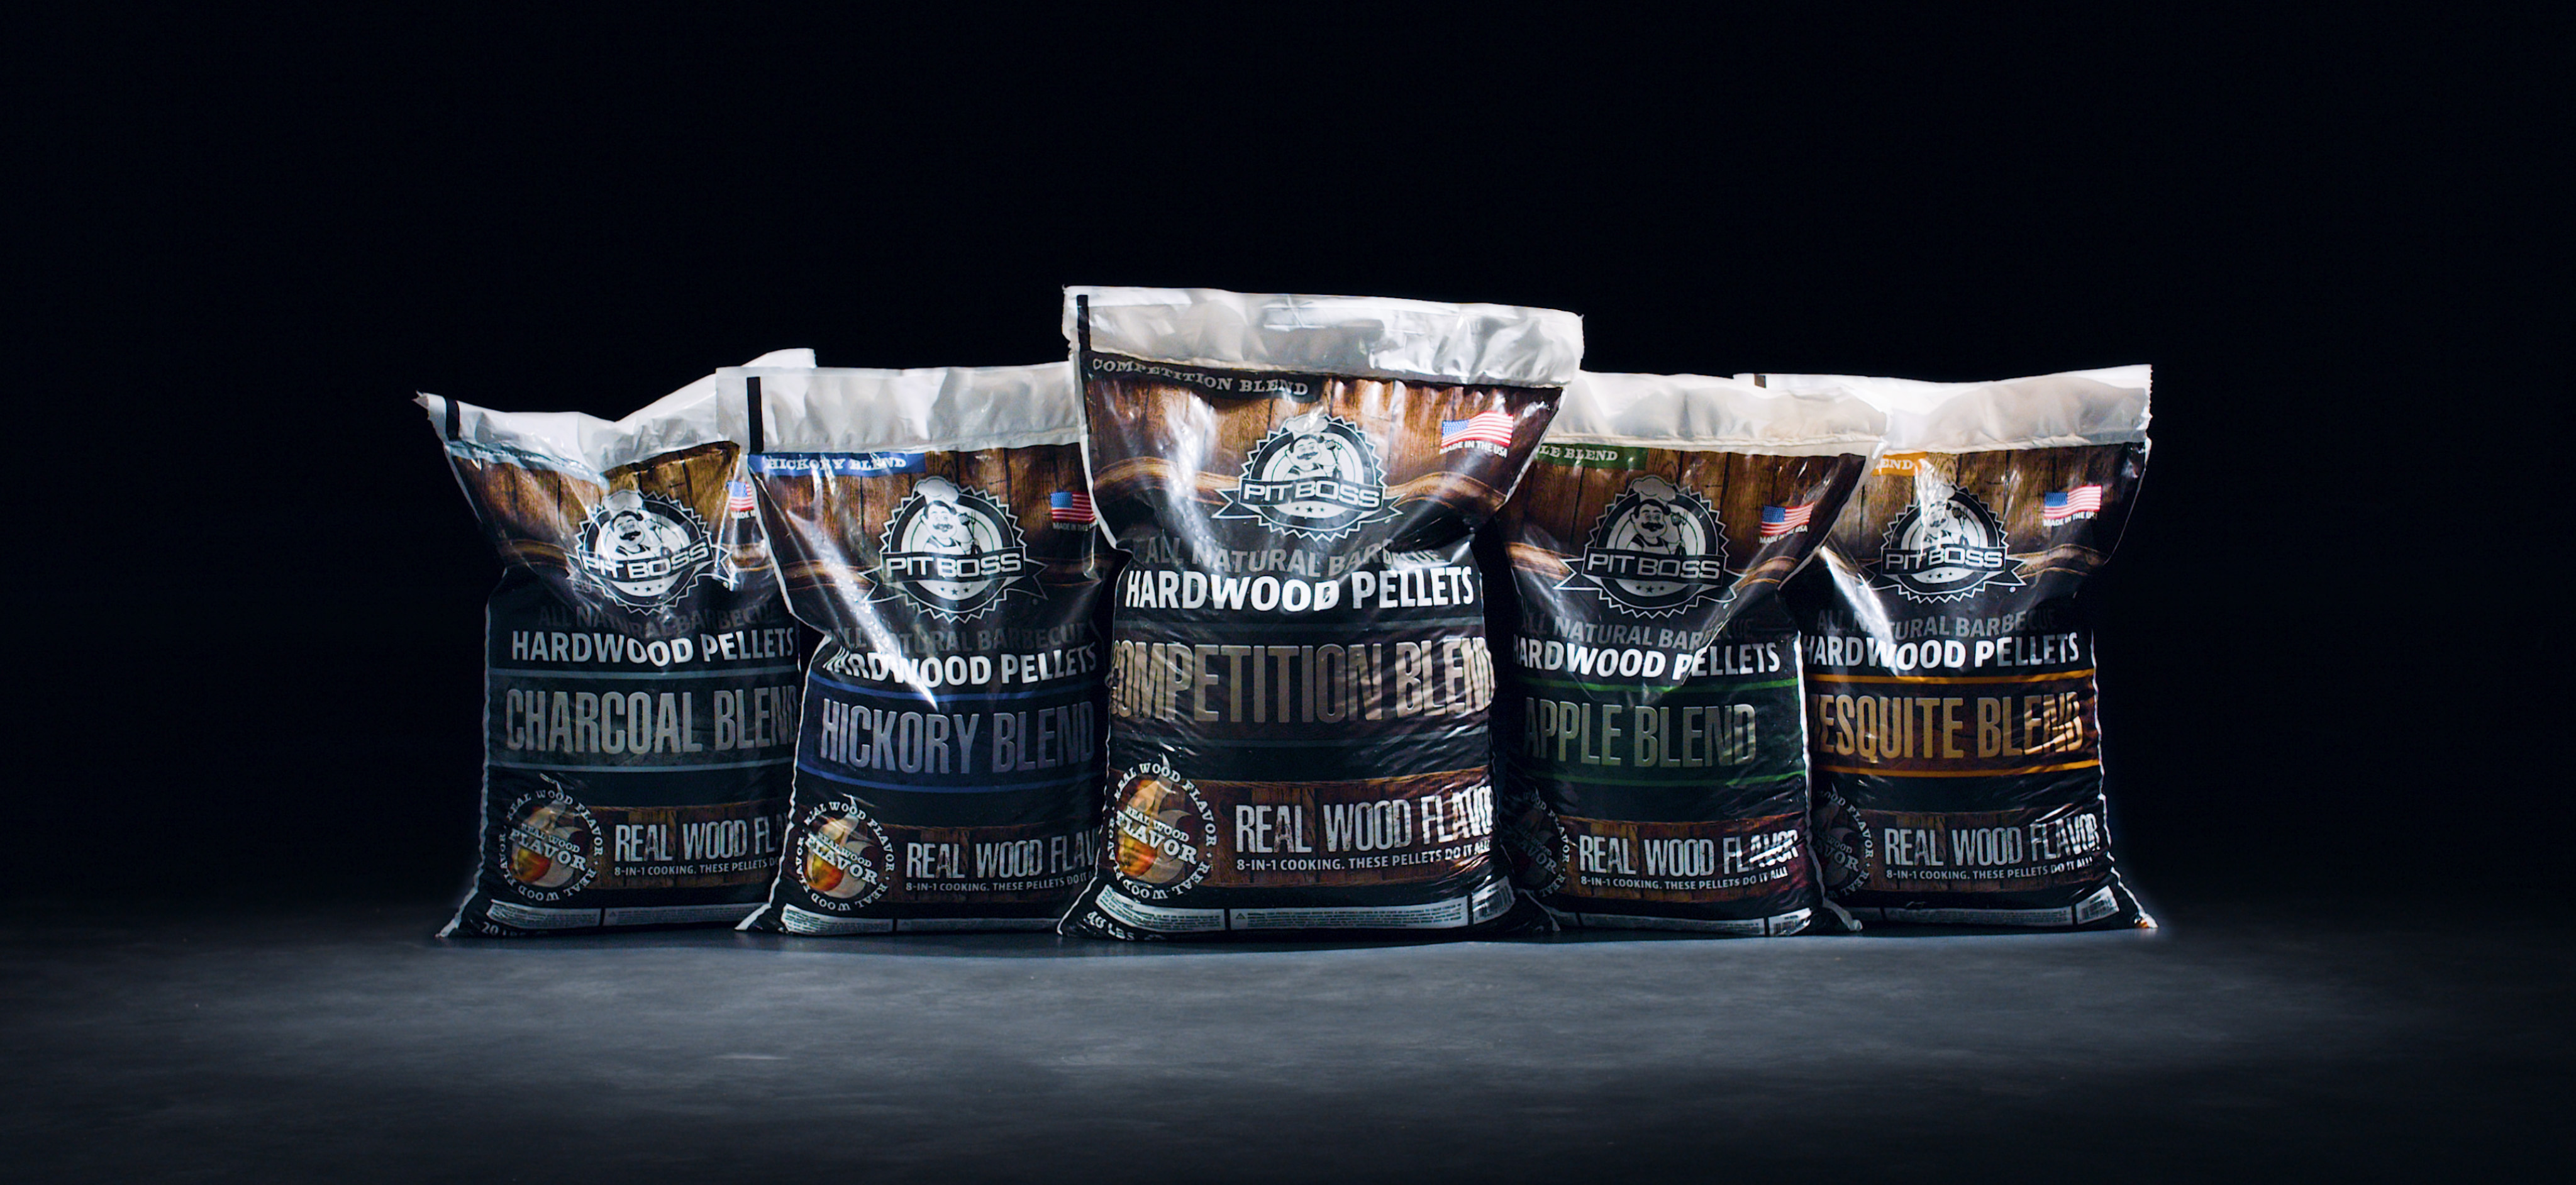 Pit Boss hardwood pellet flavors